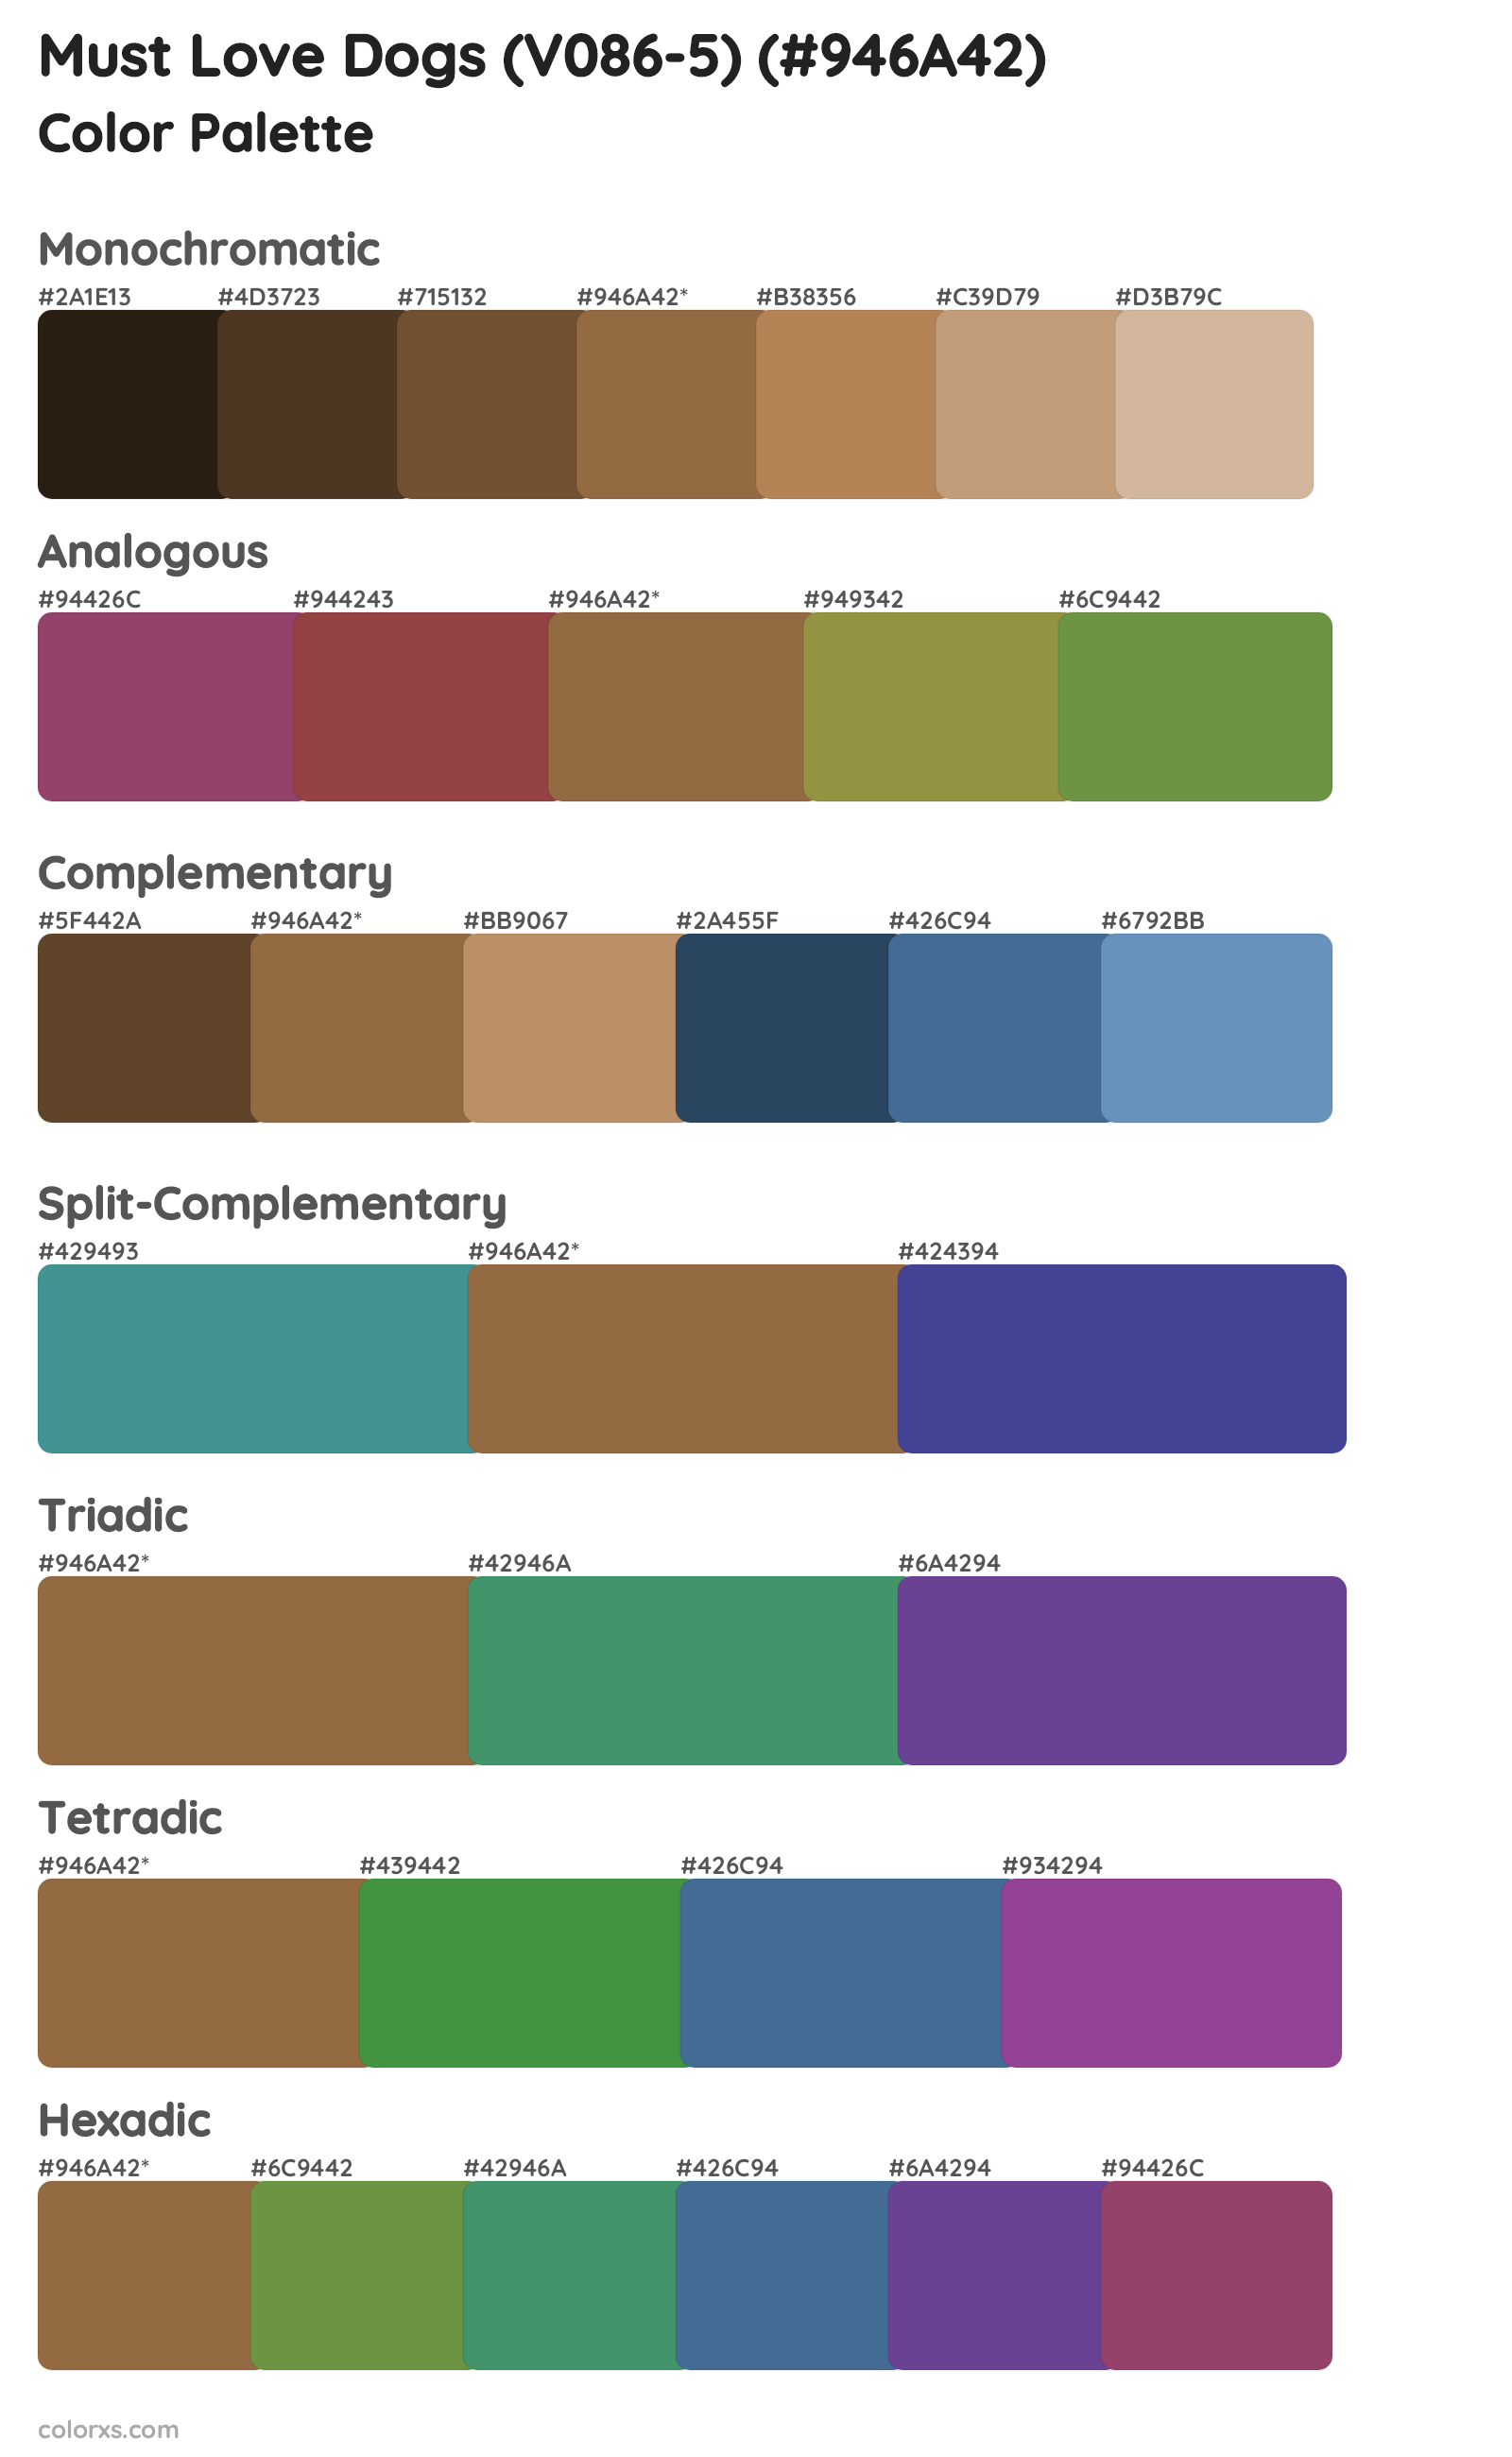 Must Love Dogs (V086-5) Color Scheme Palettes